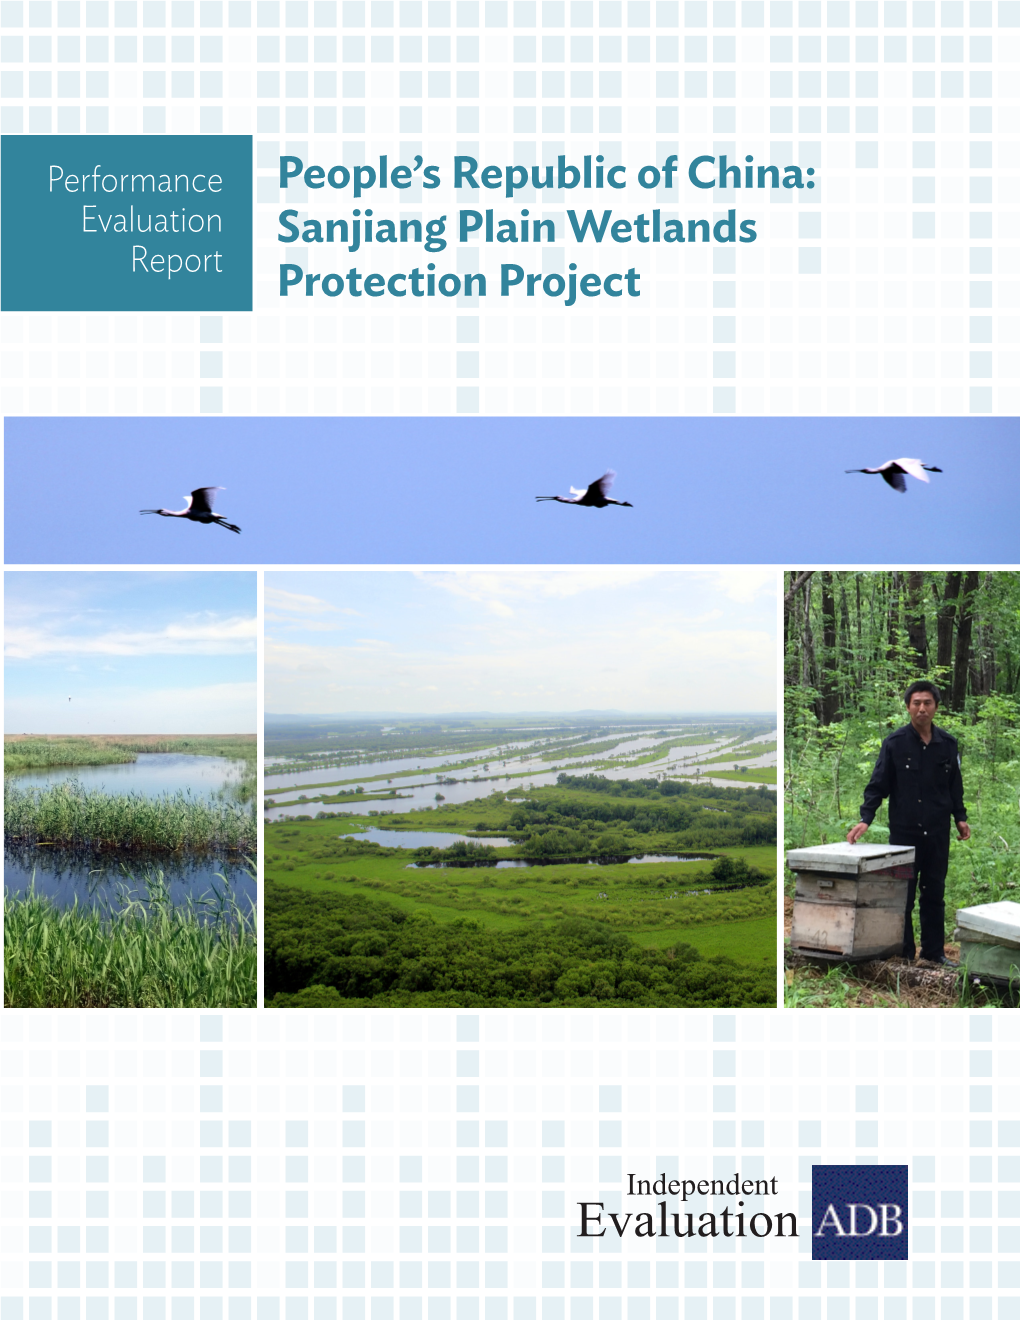 Sanjiang Plain Wetlands Protection Project